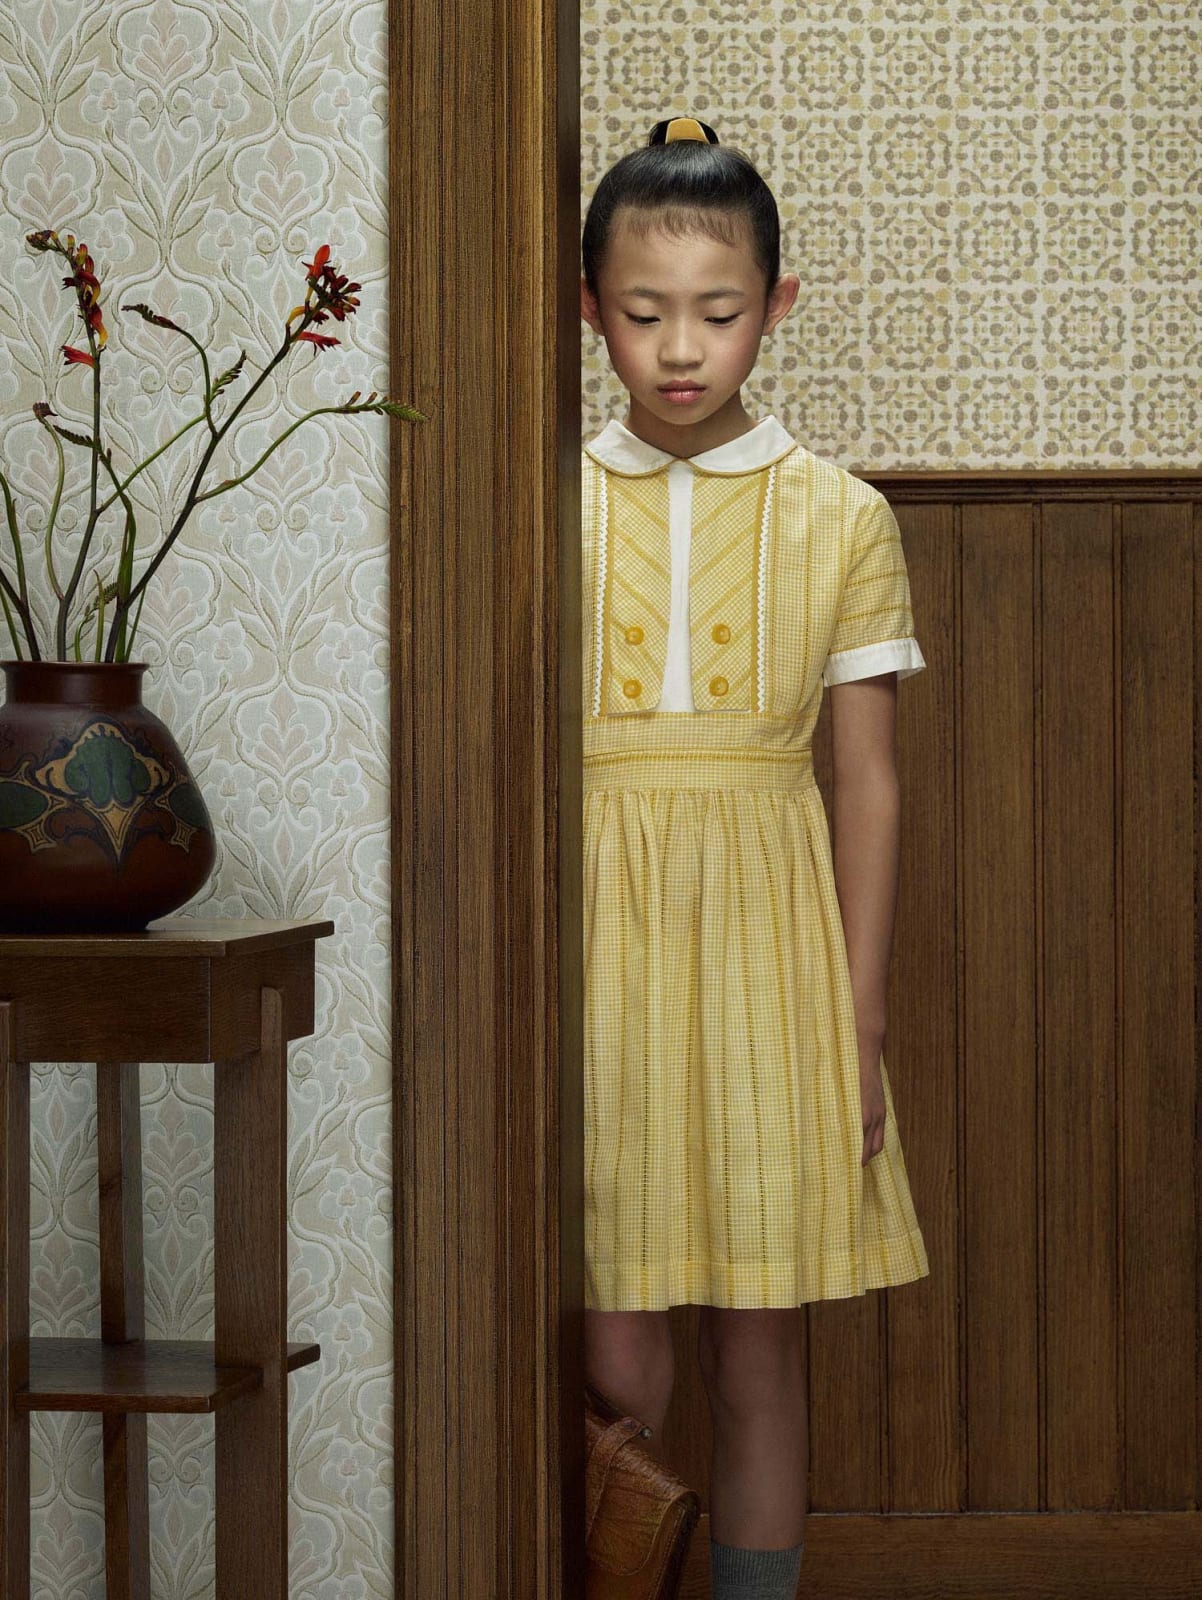 Girl in yellow dress standing in doorway by Erwin Olaf